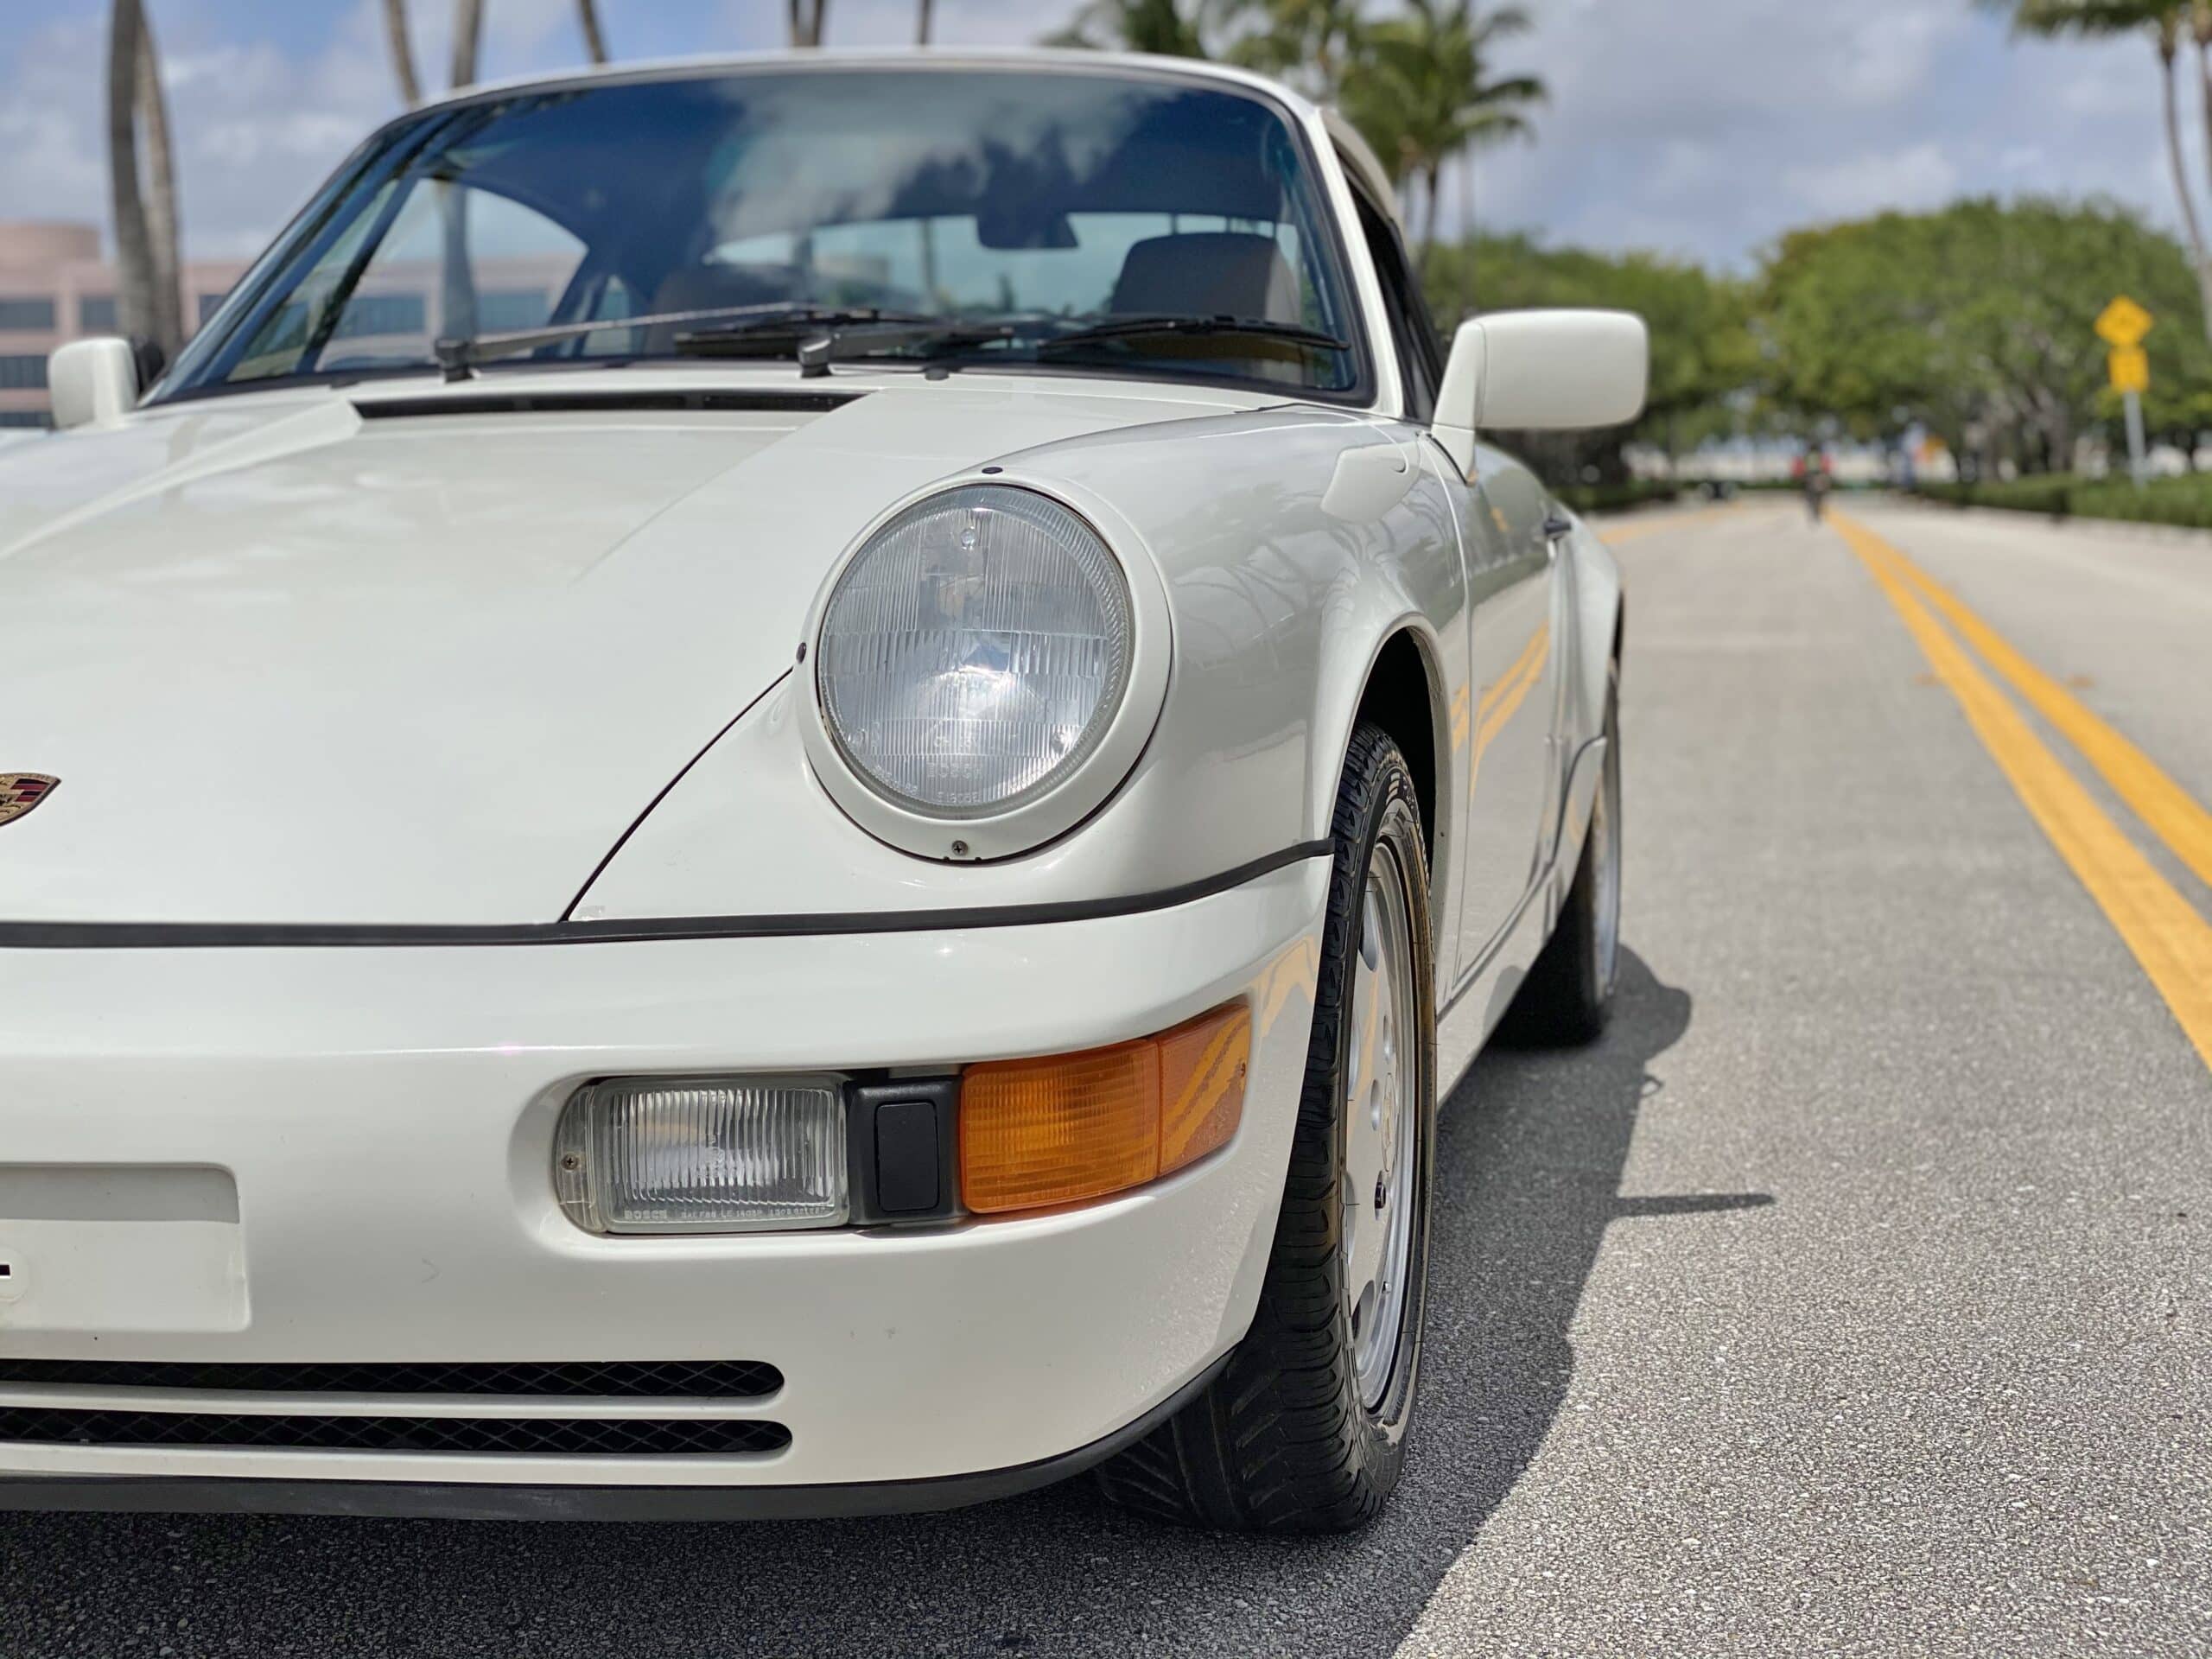 1990 Porsche 911 964 Carrera 2 GP White C2 / G50 5 Speed Manual / Texas Native / Service records /Clean history